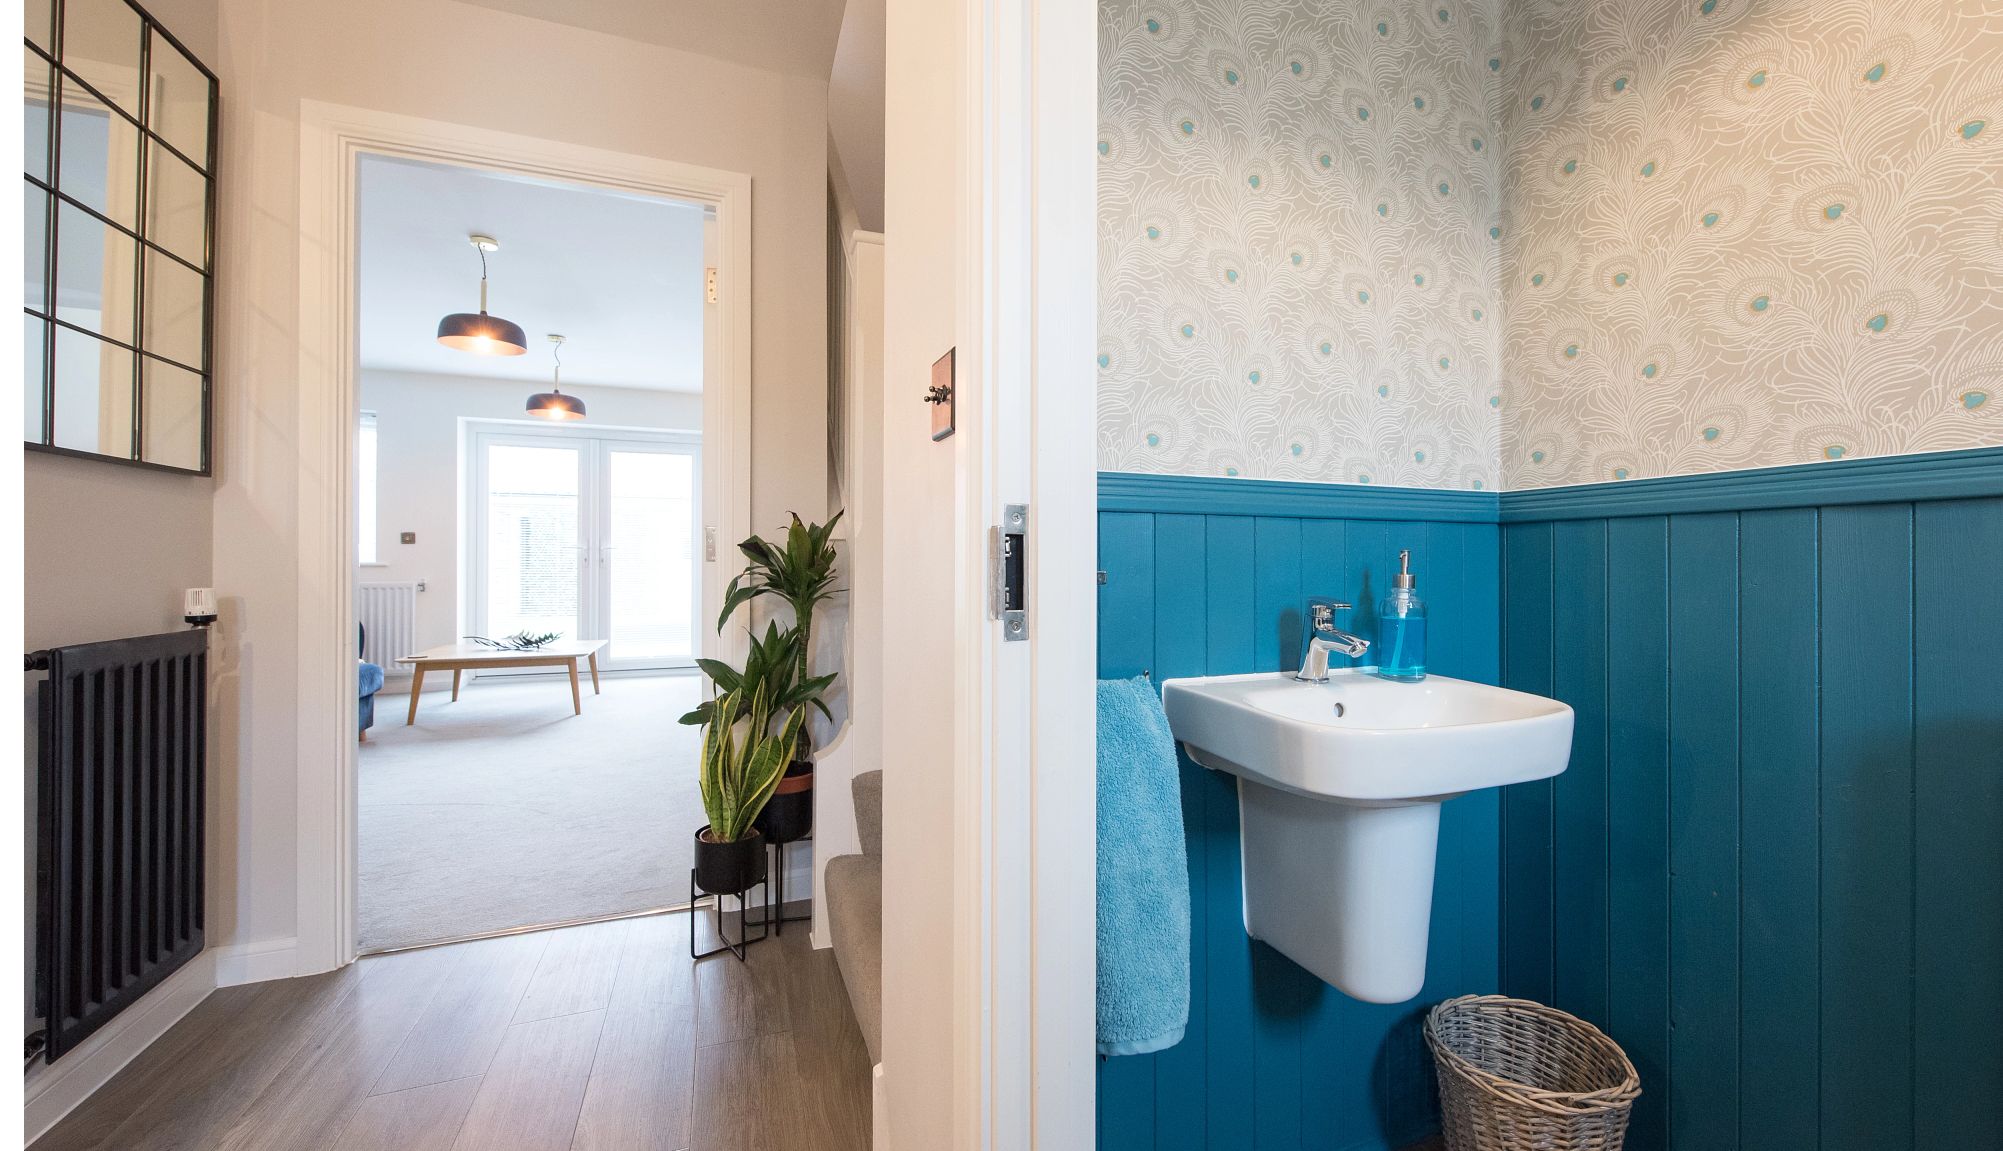 cuarto de baño con paneles azules y papel pintado con motivos de plumas de pavo real